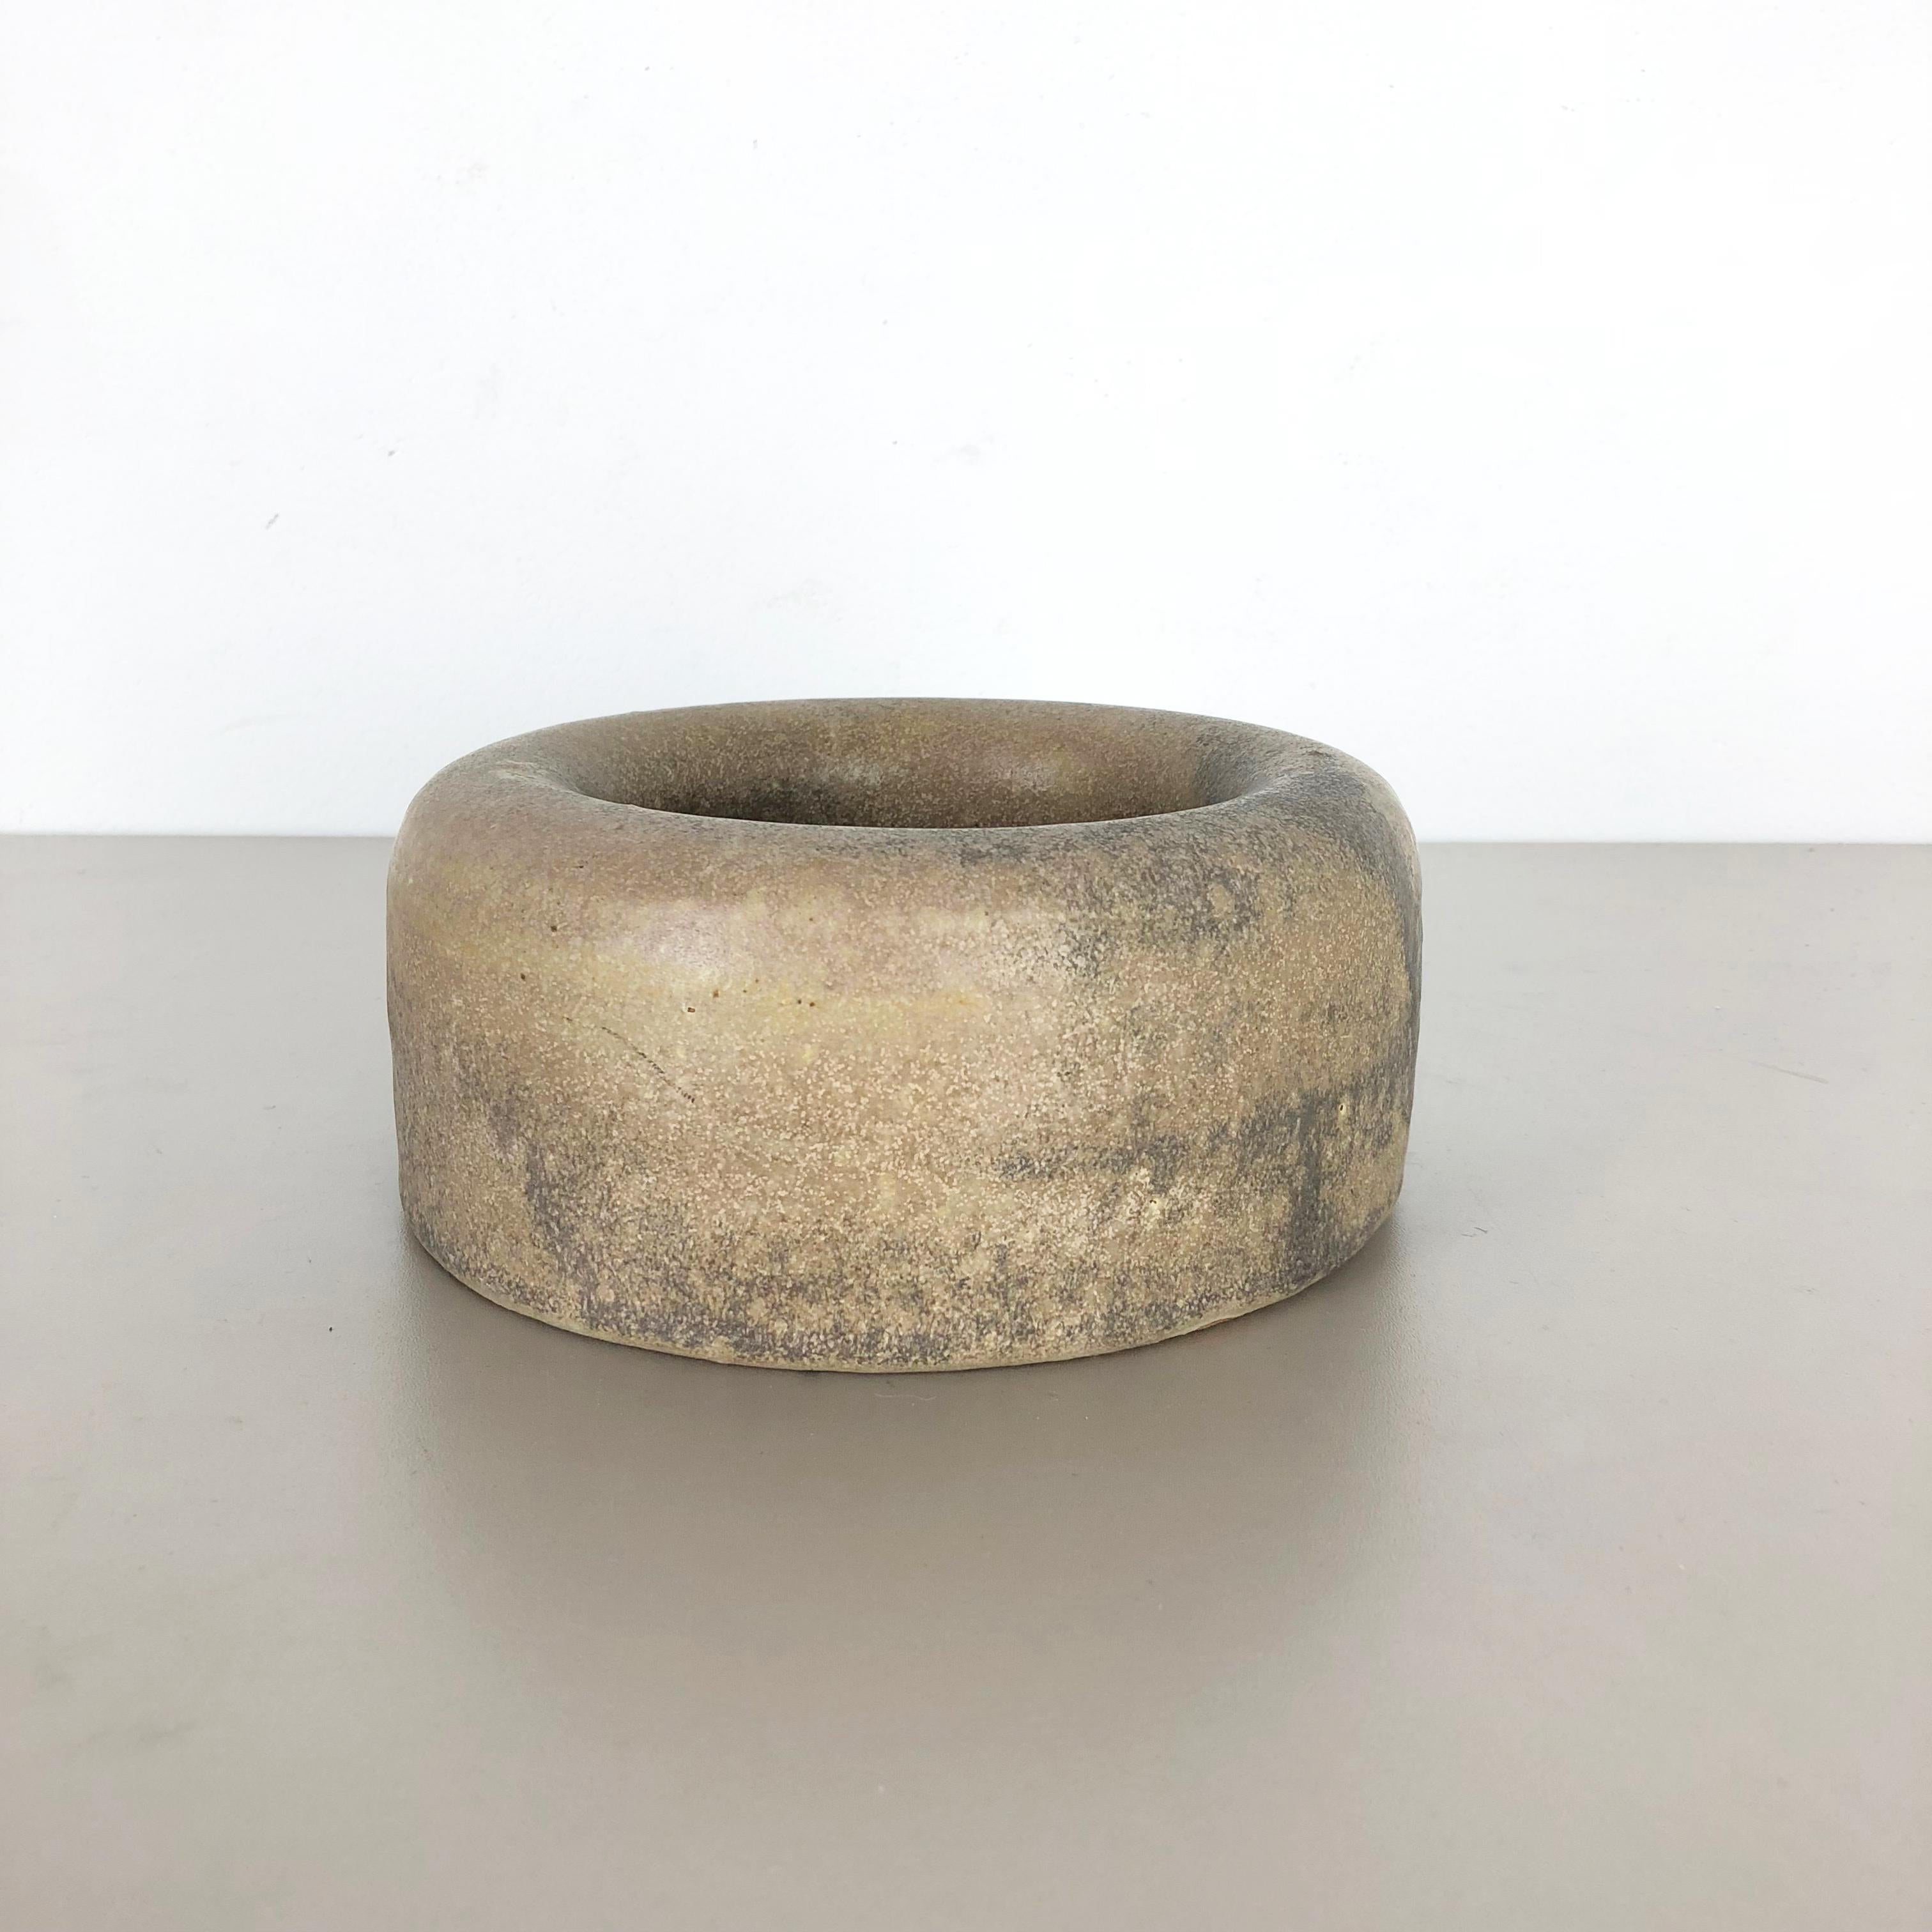 Article:

Creamic shell bowl


Producer:

Mobach, Netherlands


Designer:

Piet Knepper




Decade:

1960-1965



Description:

this original vintage studio pottery was produced in the 1960s by Piet Knepper for Mobach in